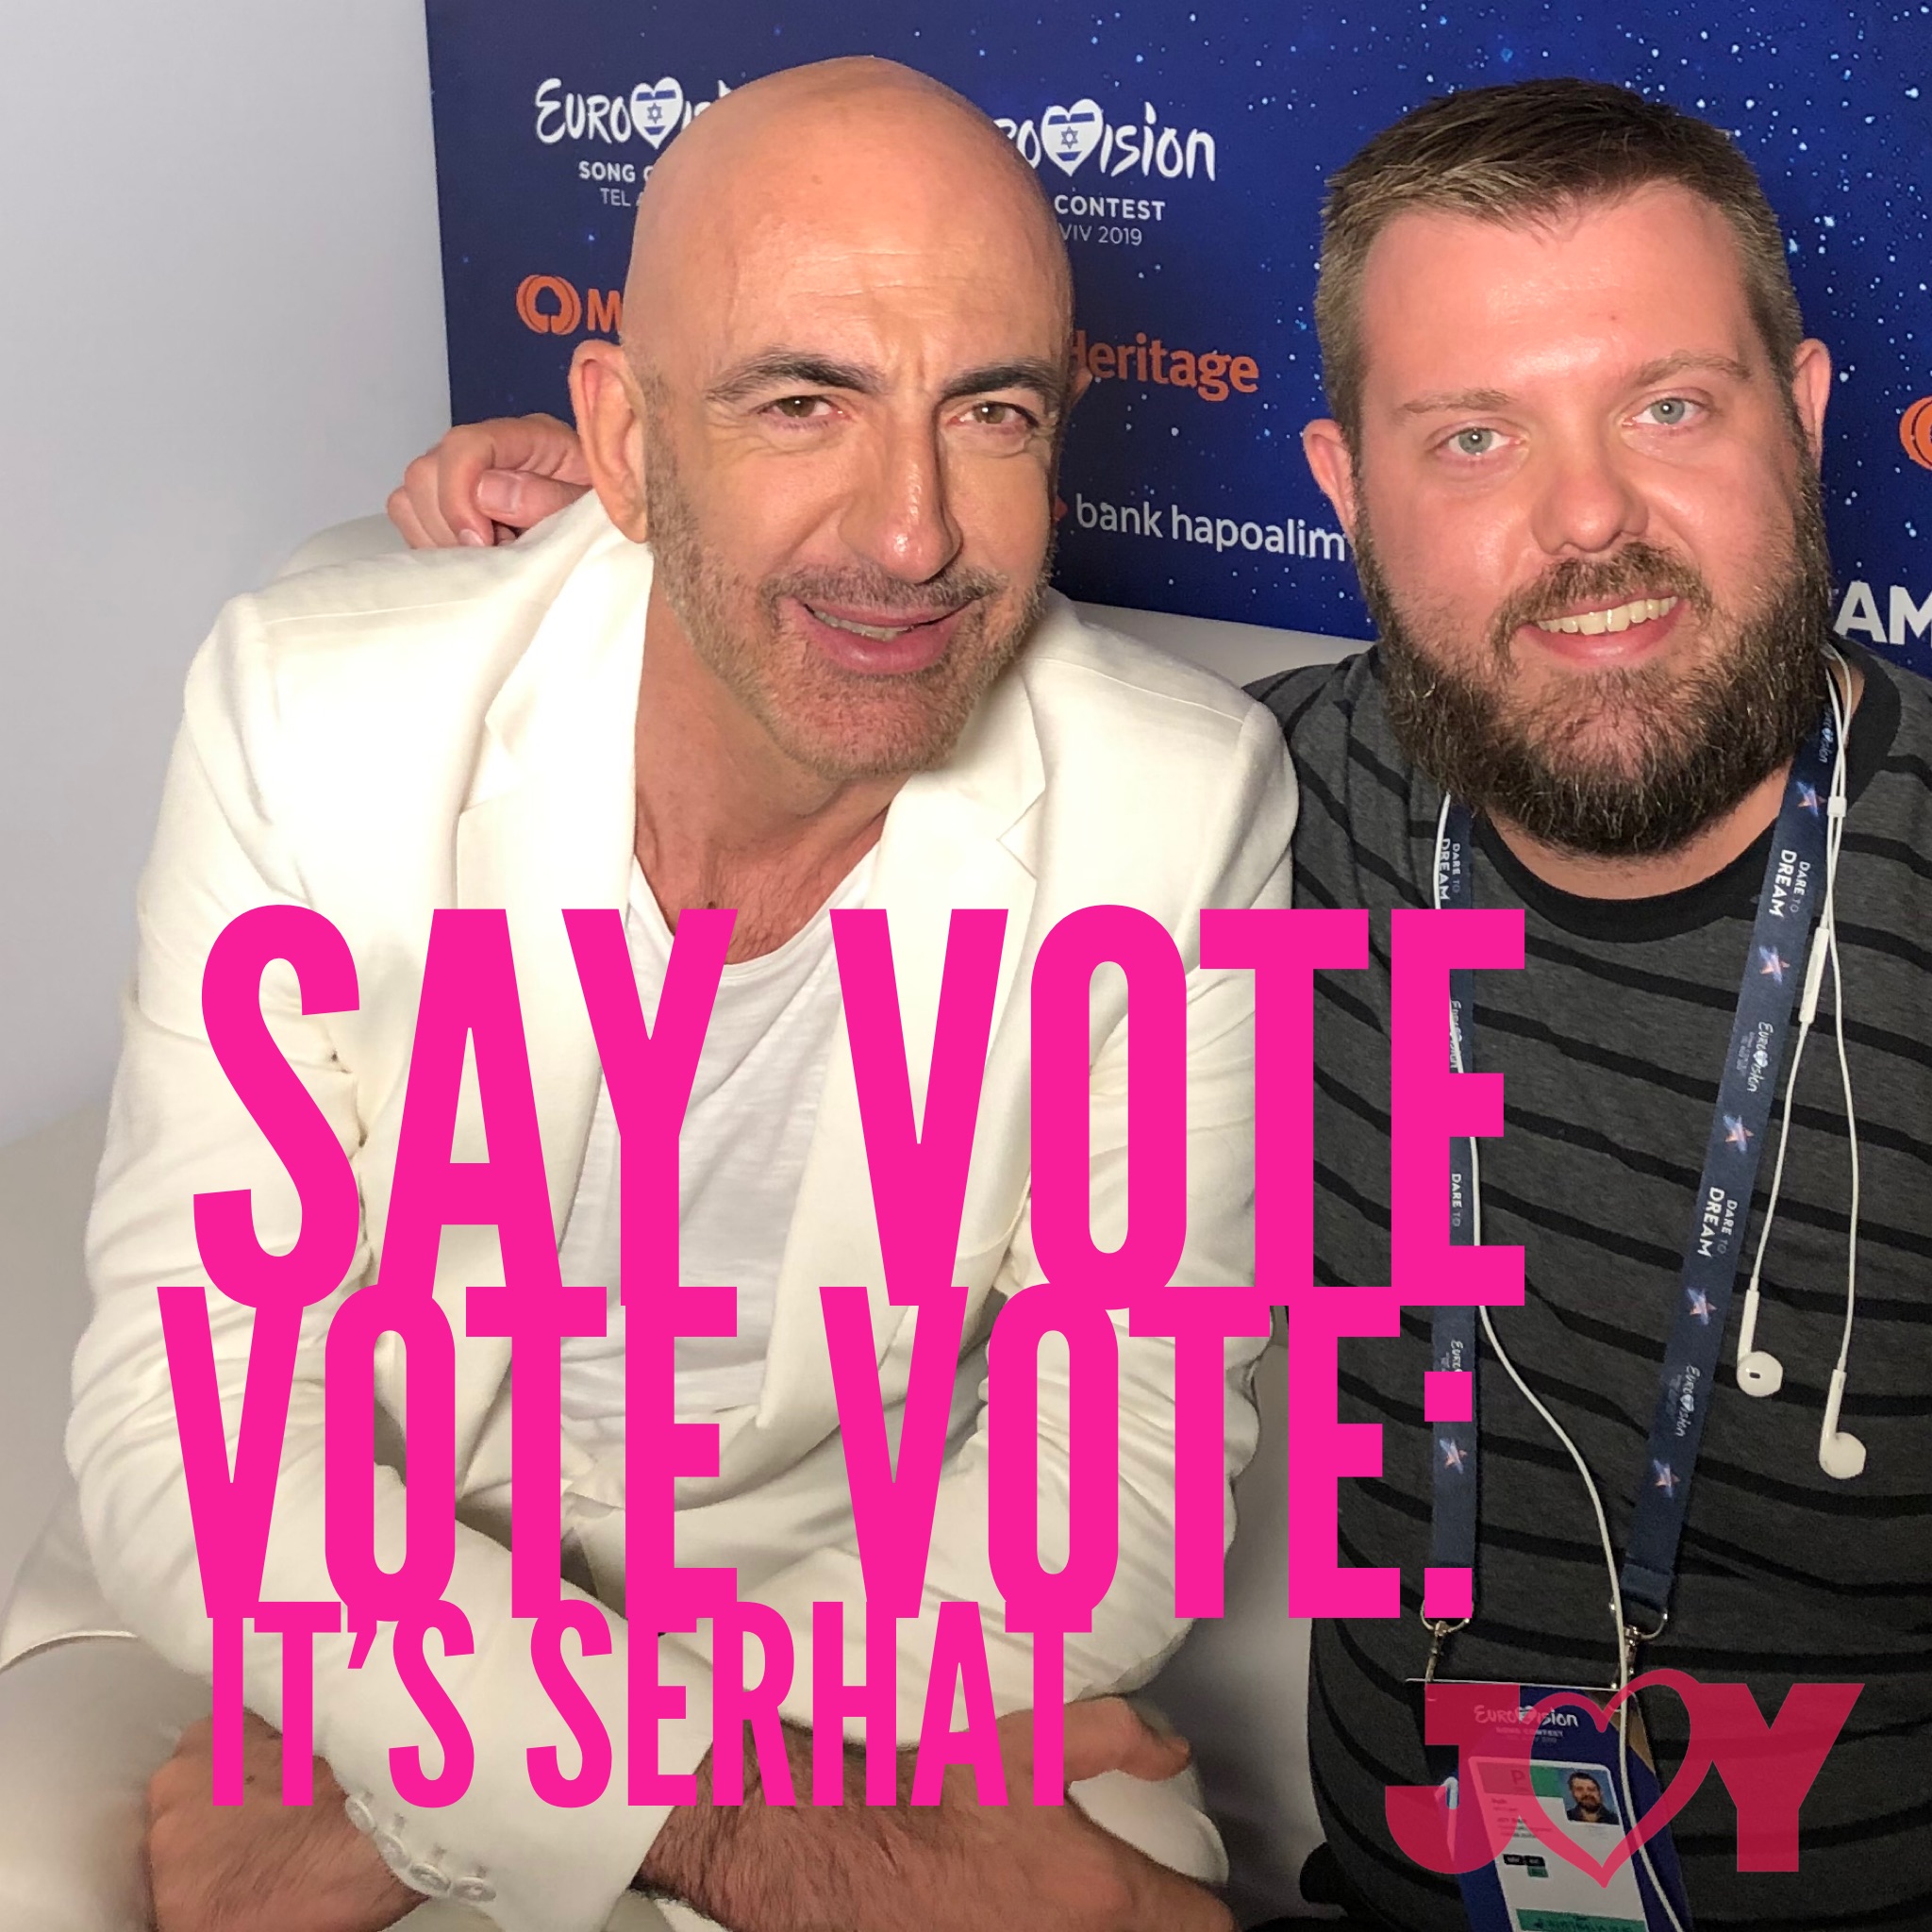 Say vote vote vote: It’s Serhat